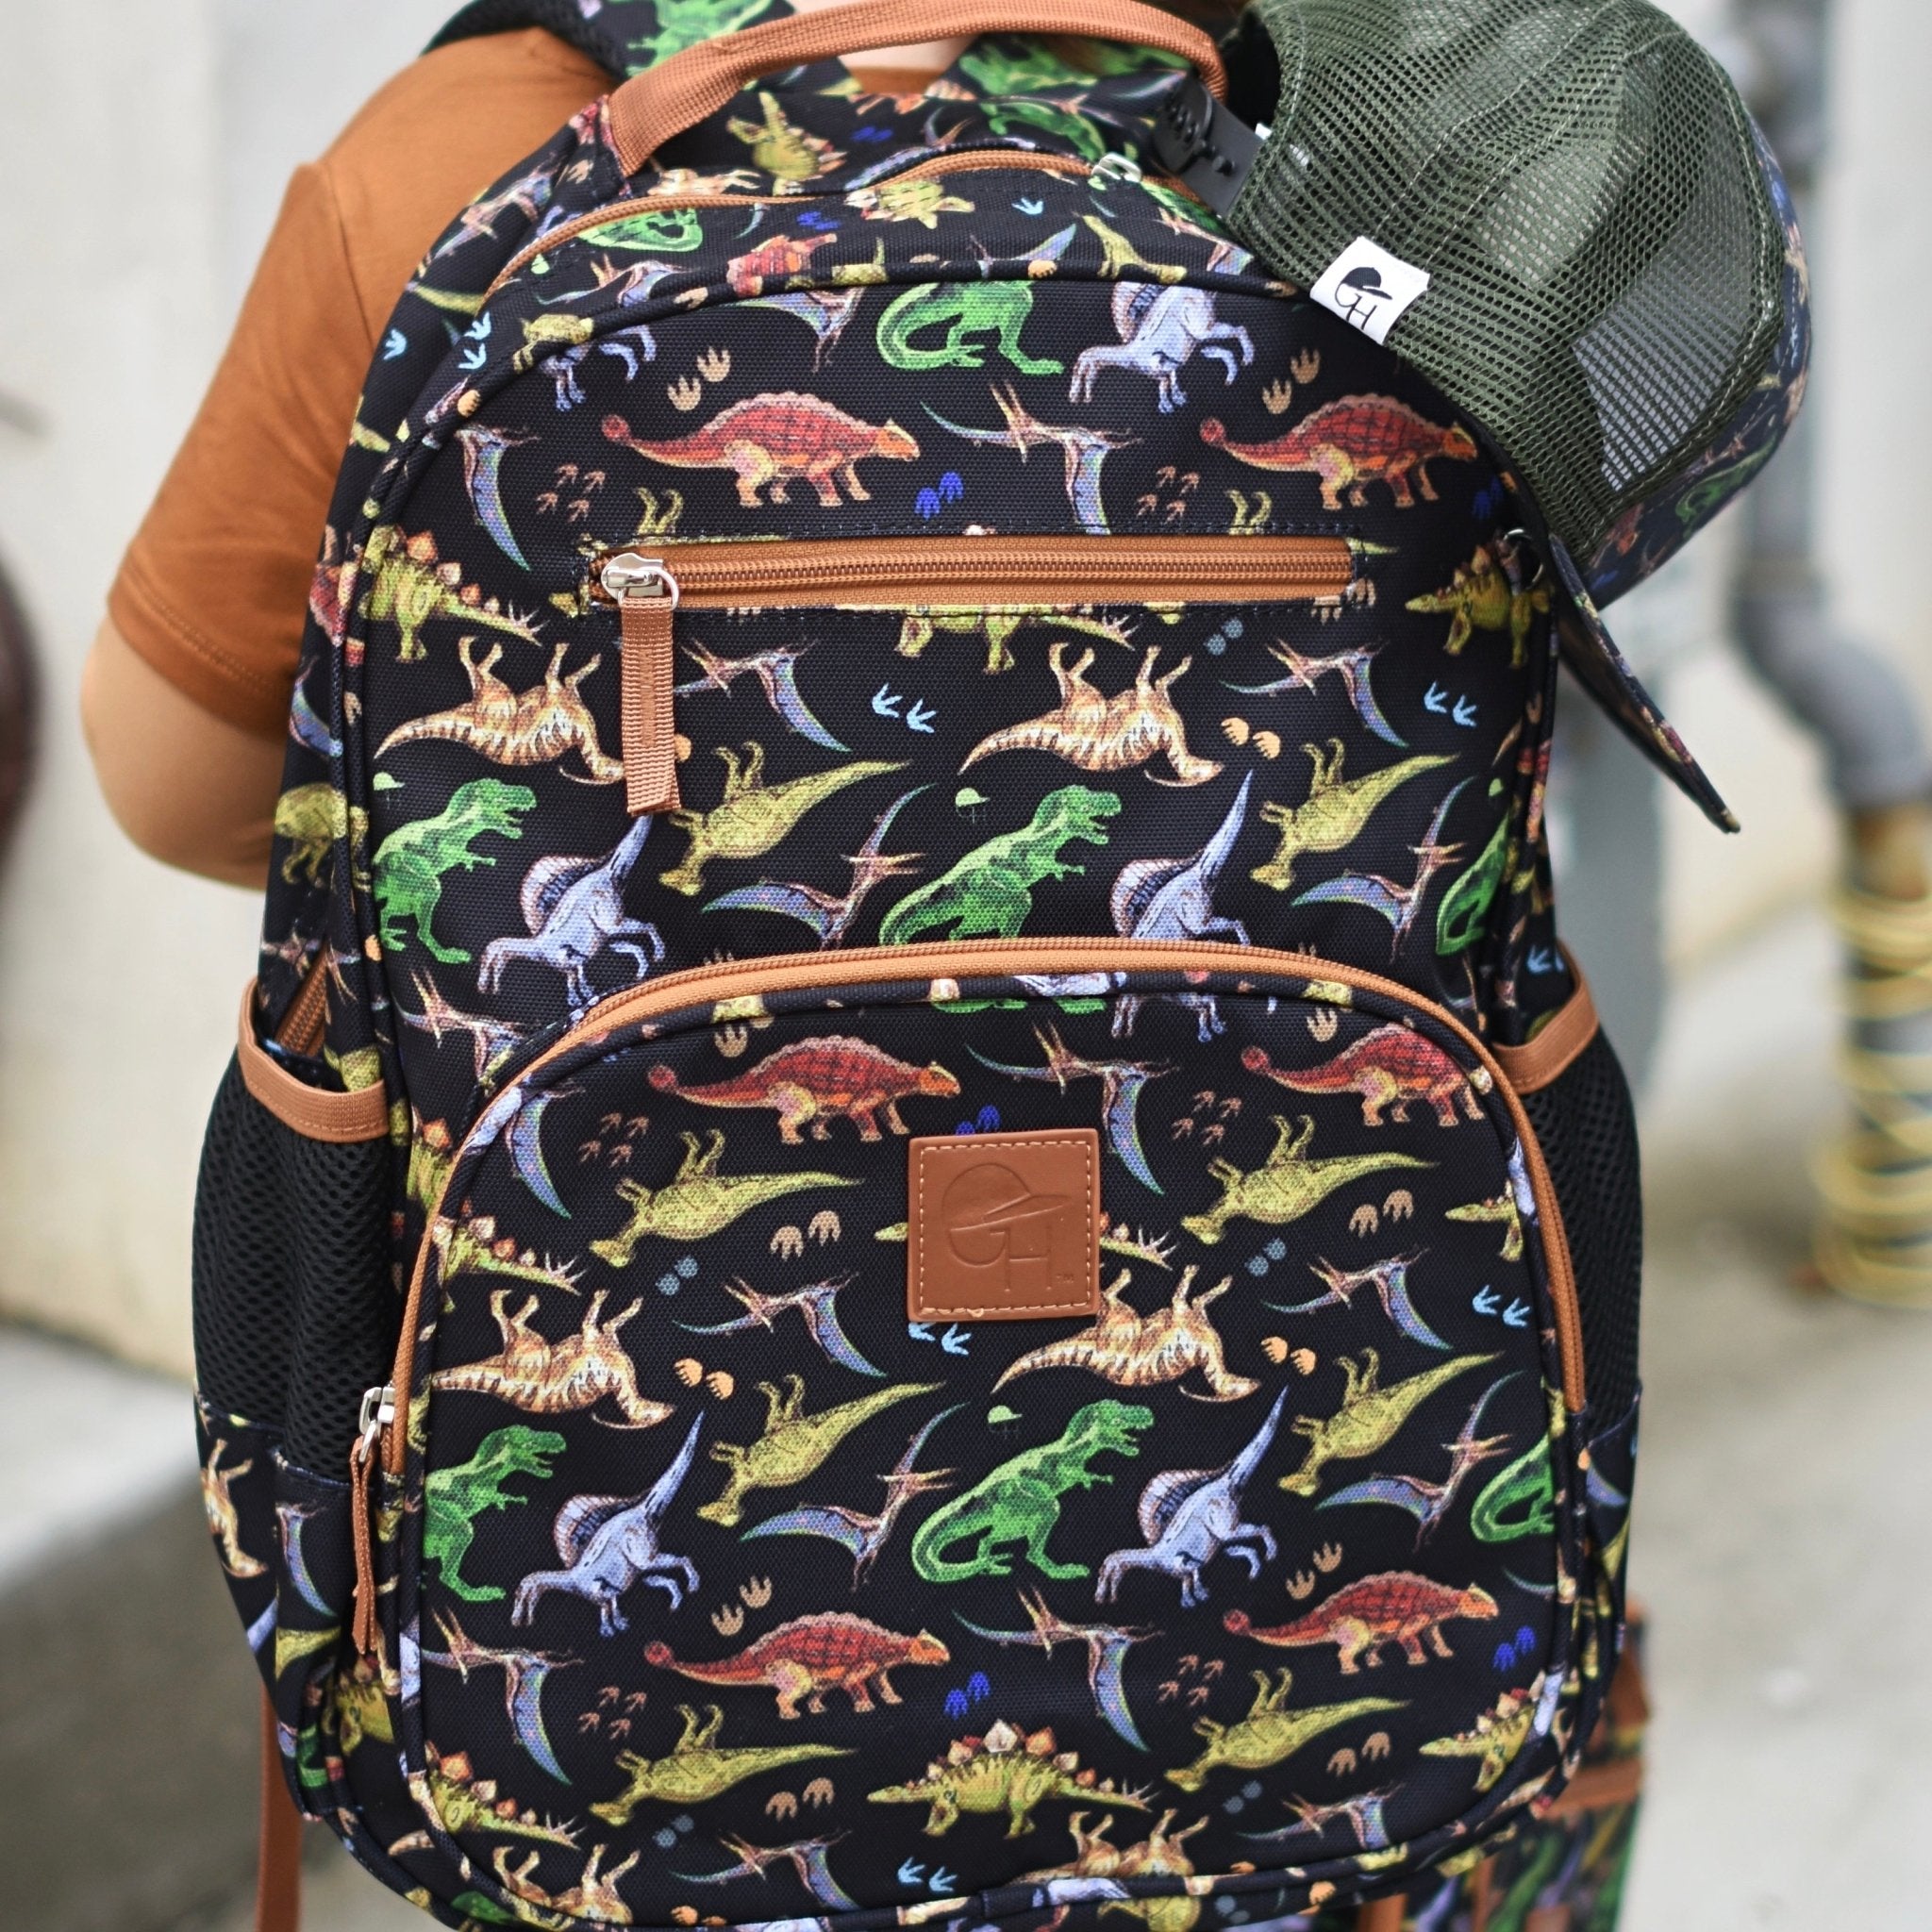 Dinosaur Backpack - George Hats